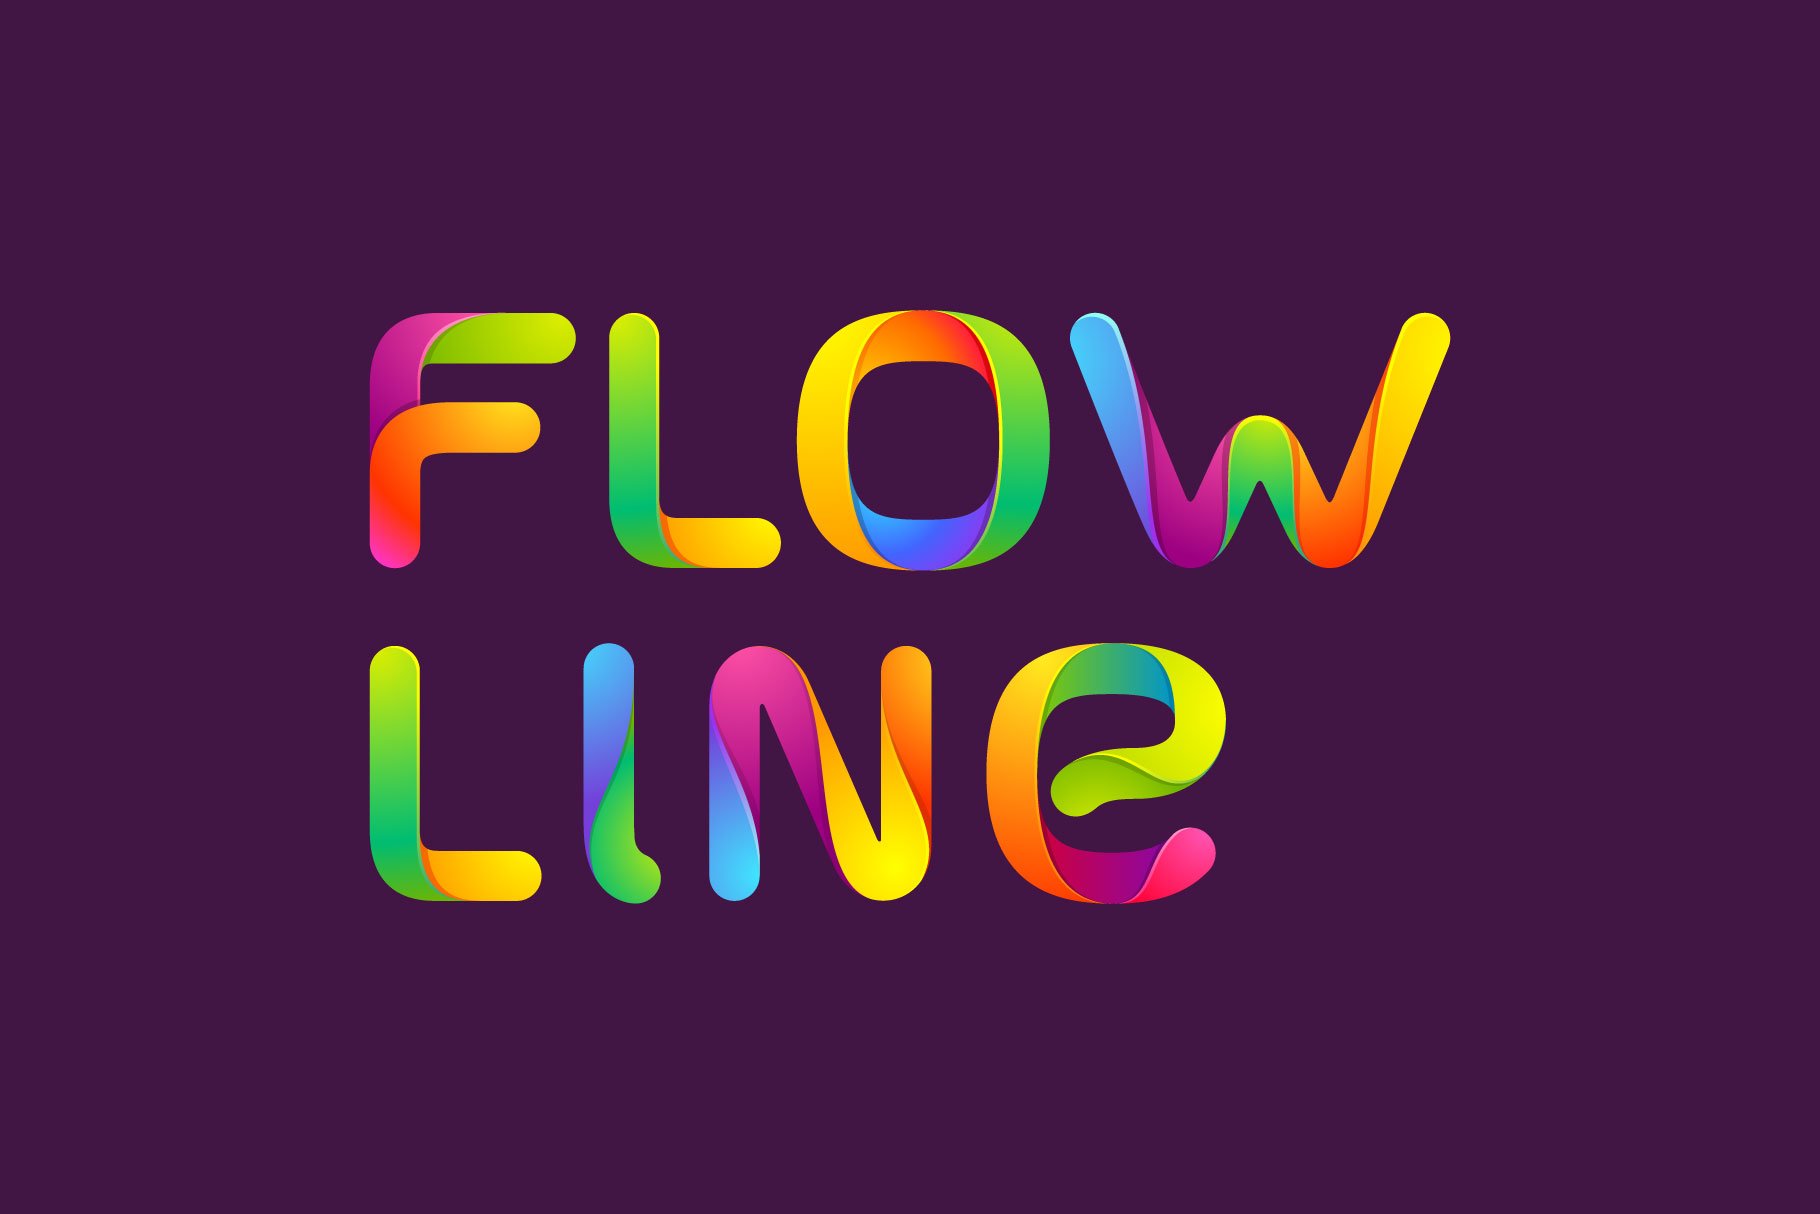 Flowline font cover image.